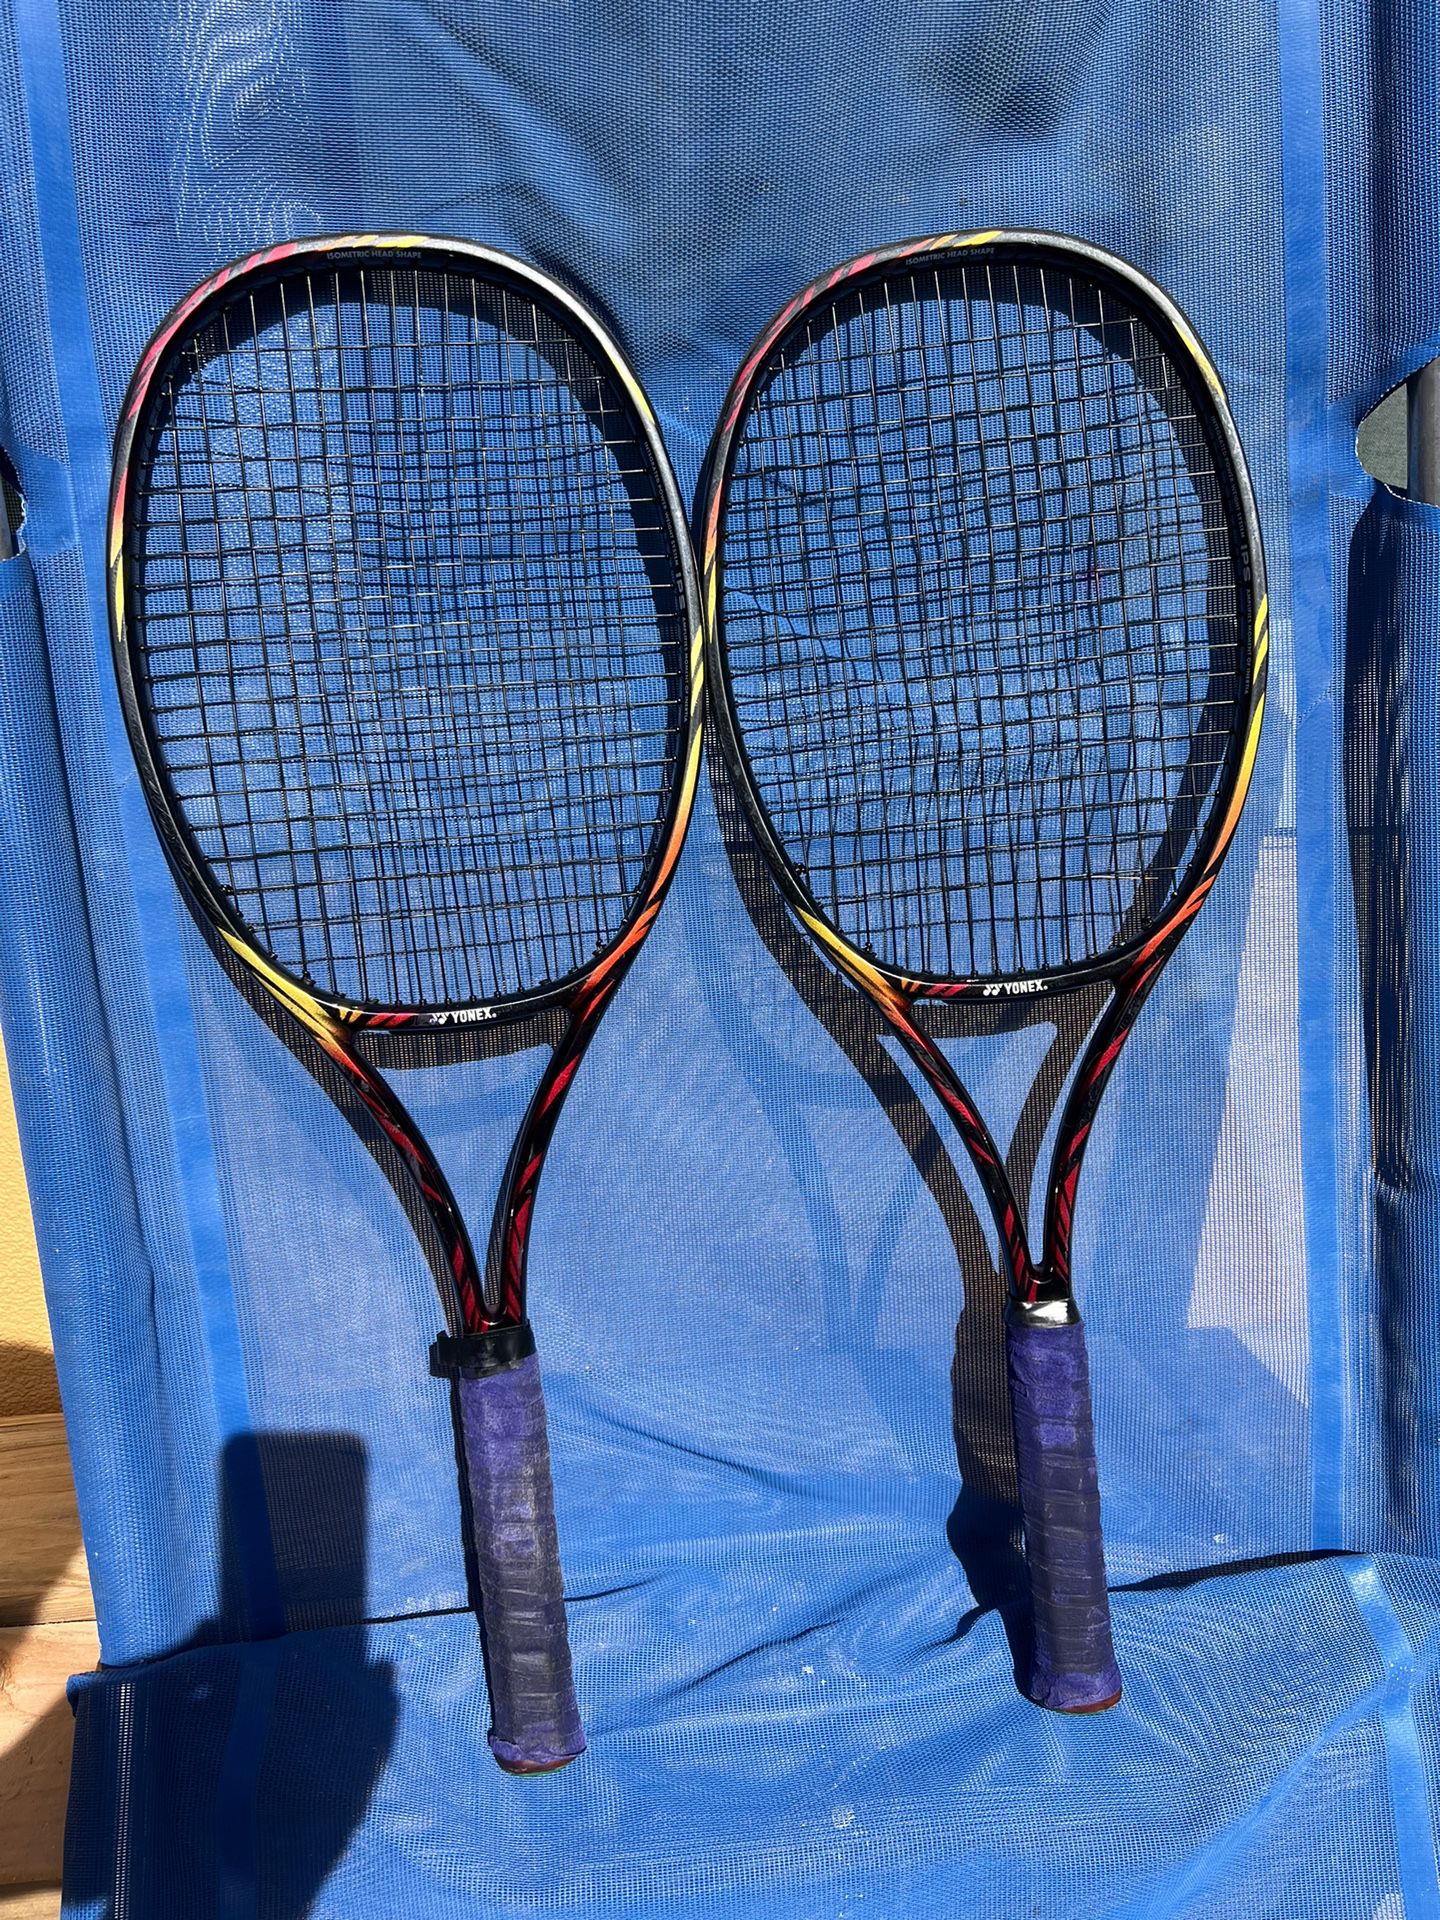 Yonex Tennis Rackets  